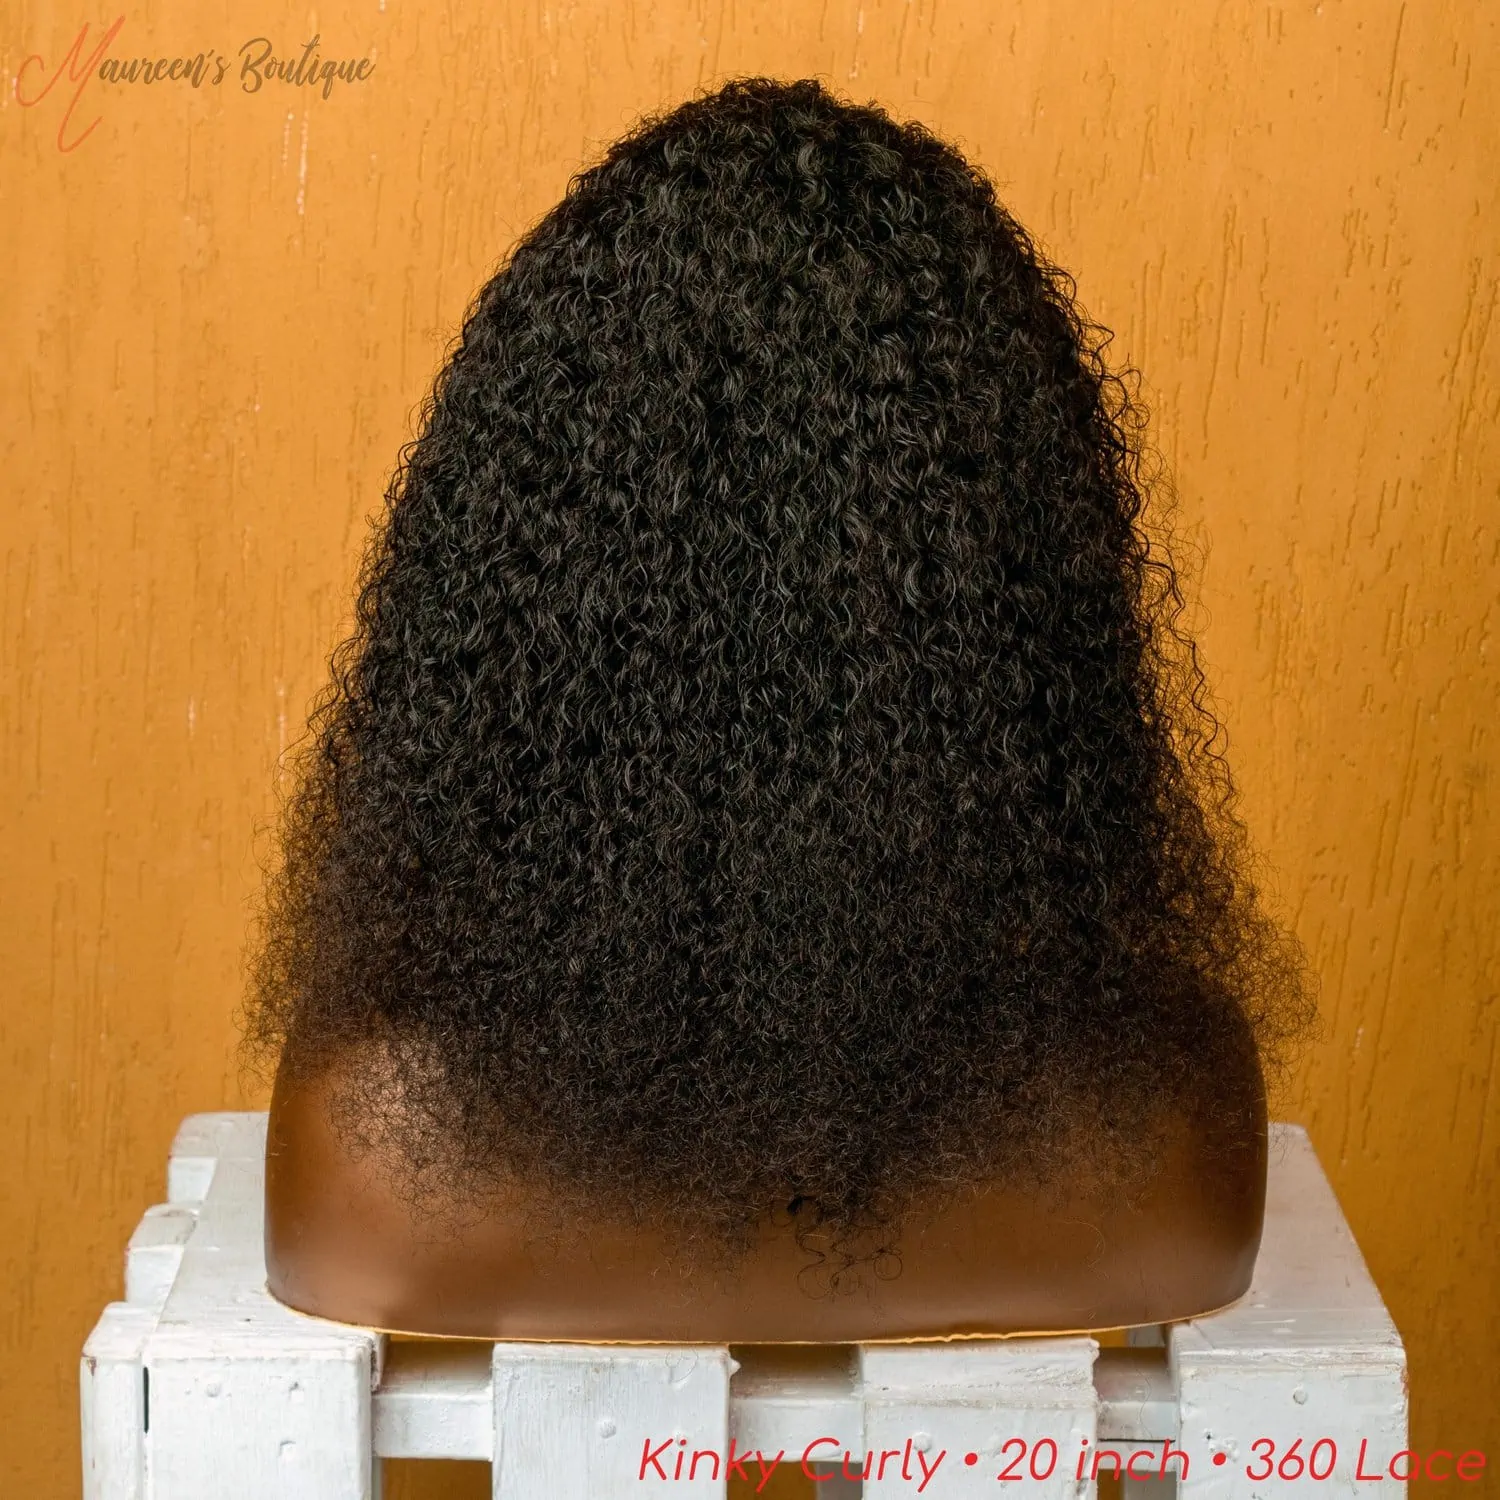 Kinky Curly 360 human hair wig 20 inch maureens.com 3